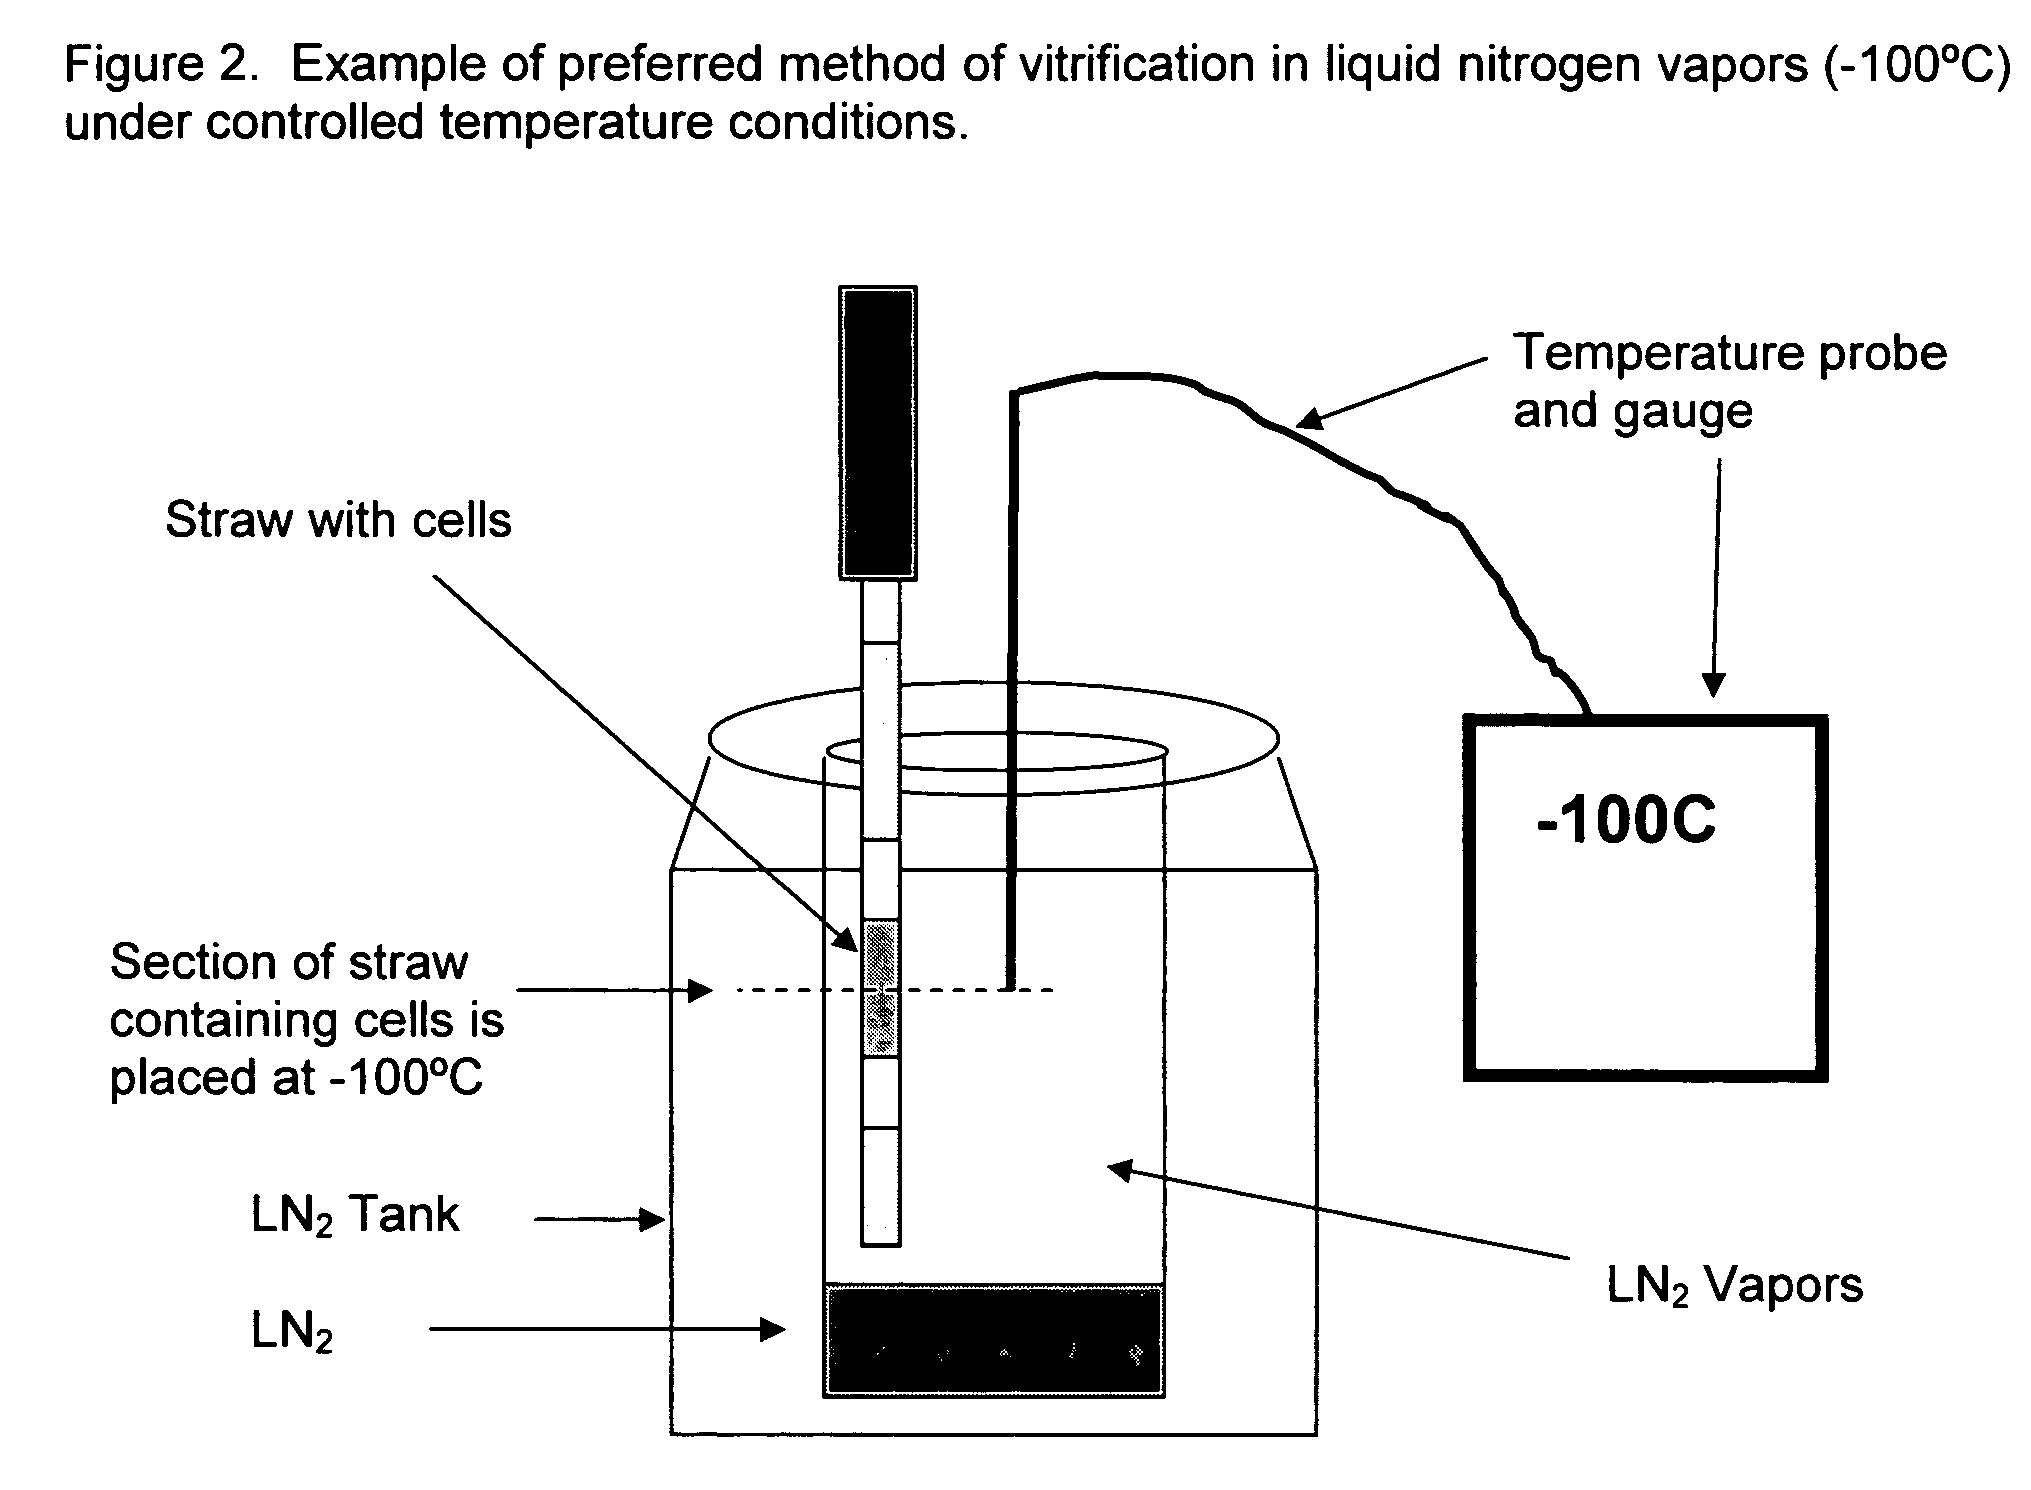 Method for vitrification of mammalian cells